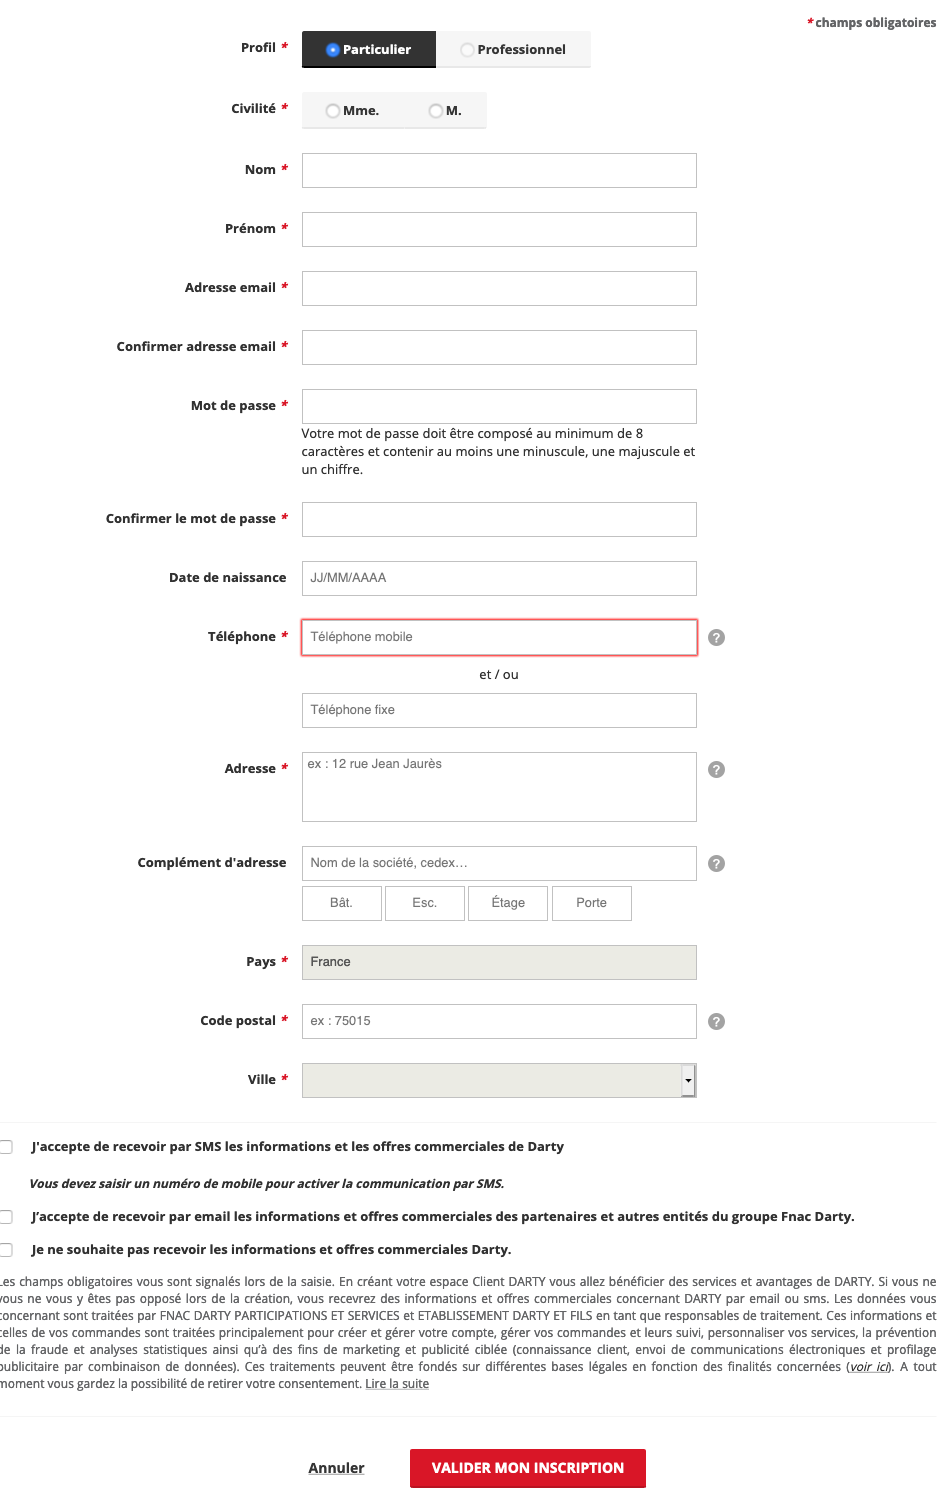 register form at darty.fr